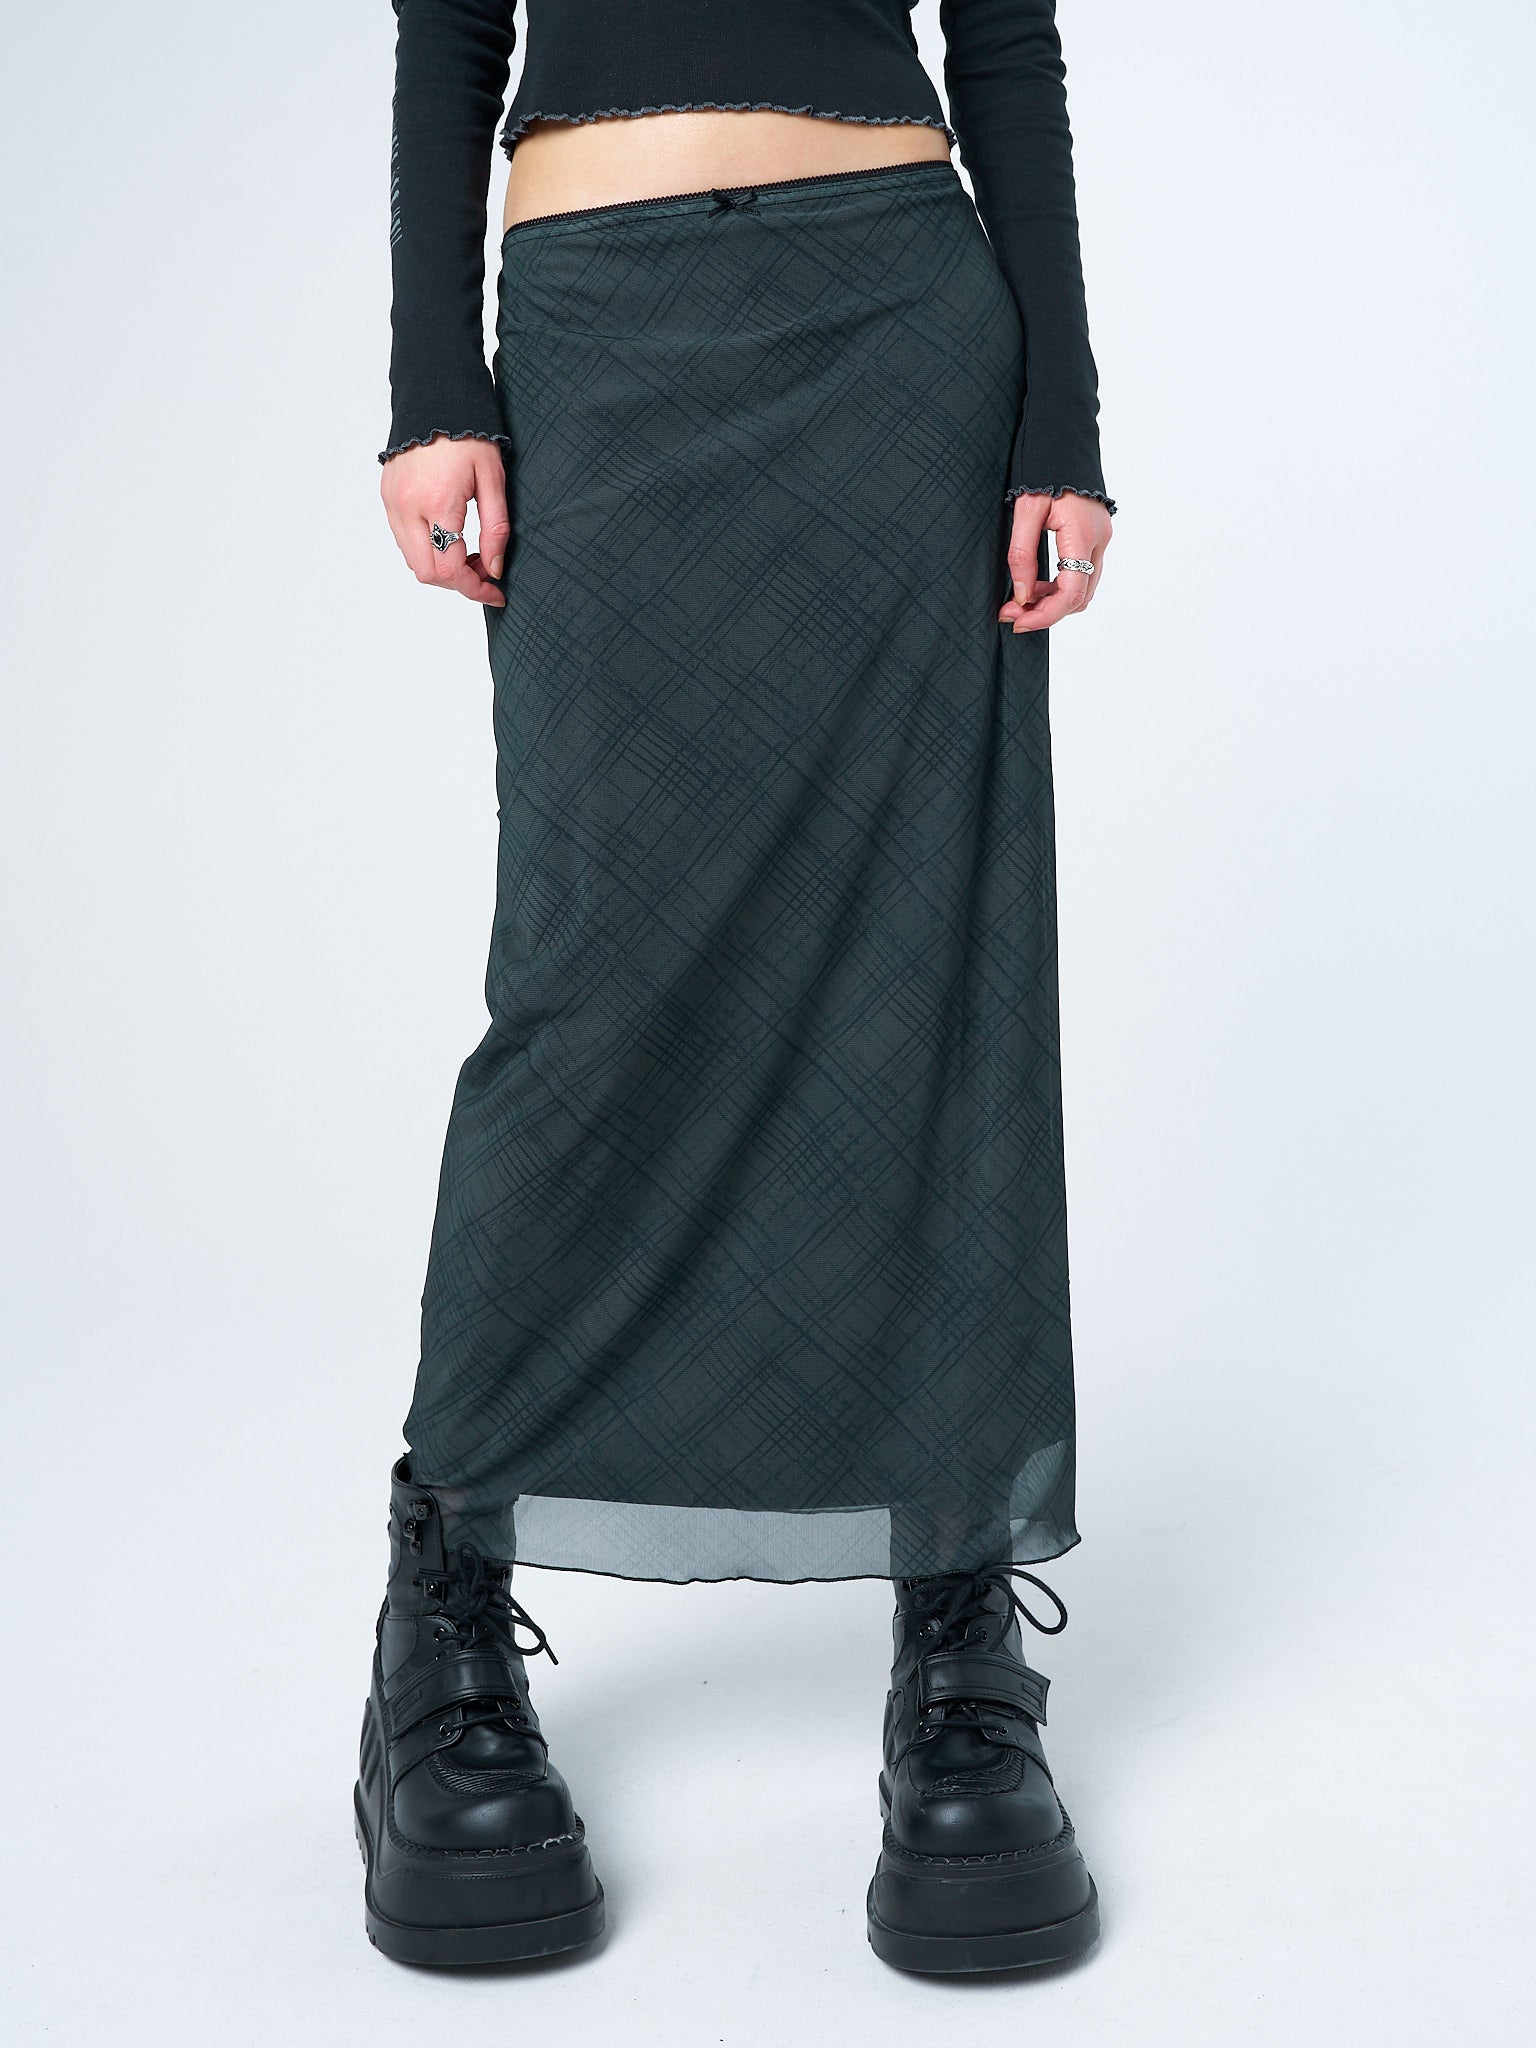 Green Checked Mesh Maxi Skirt - Boho Sheer Long Skirt | Minga London